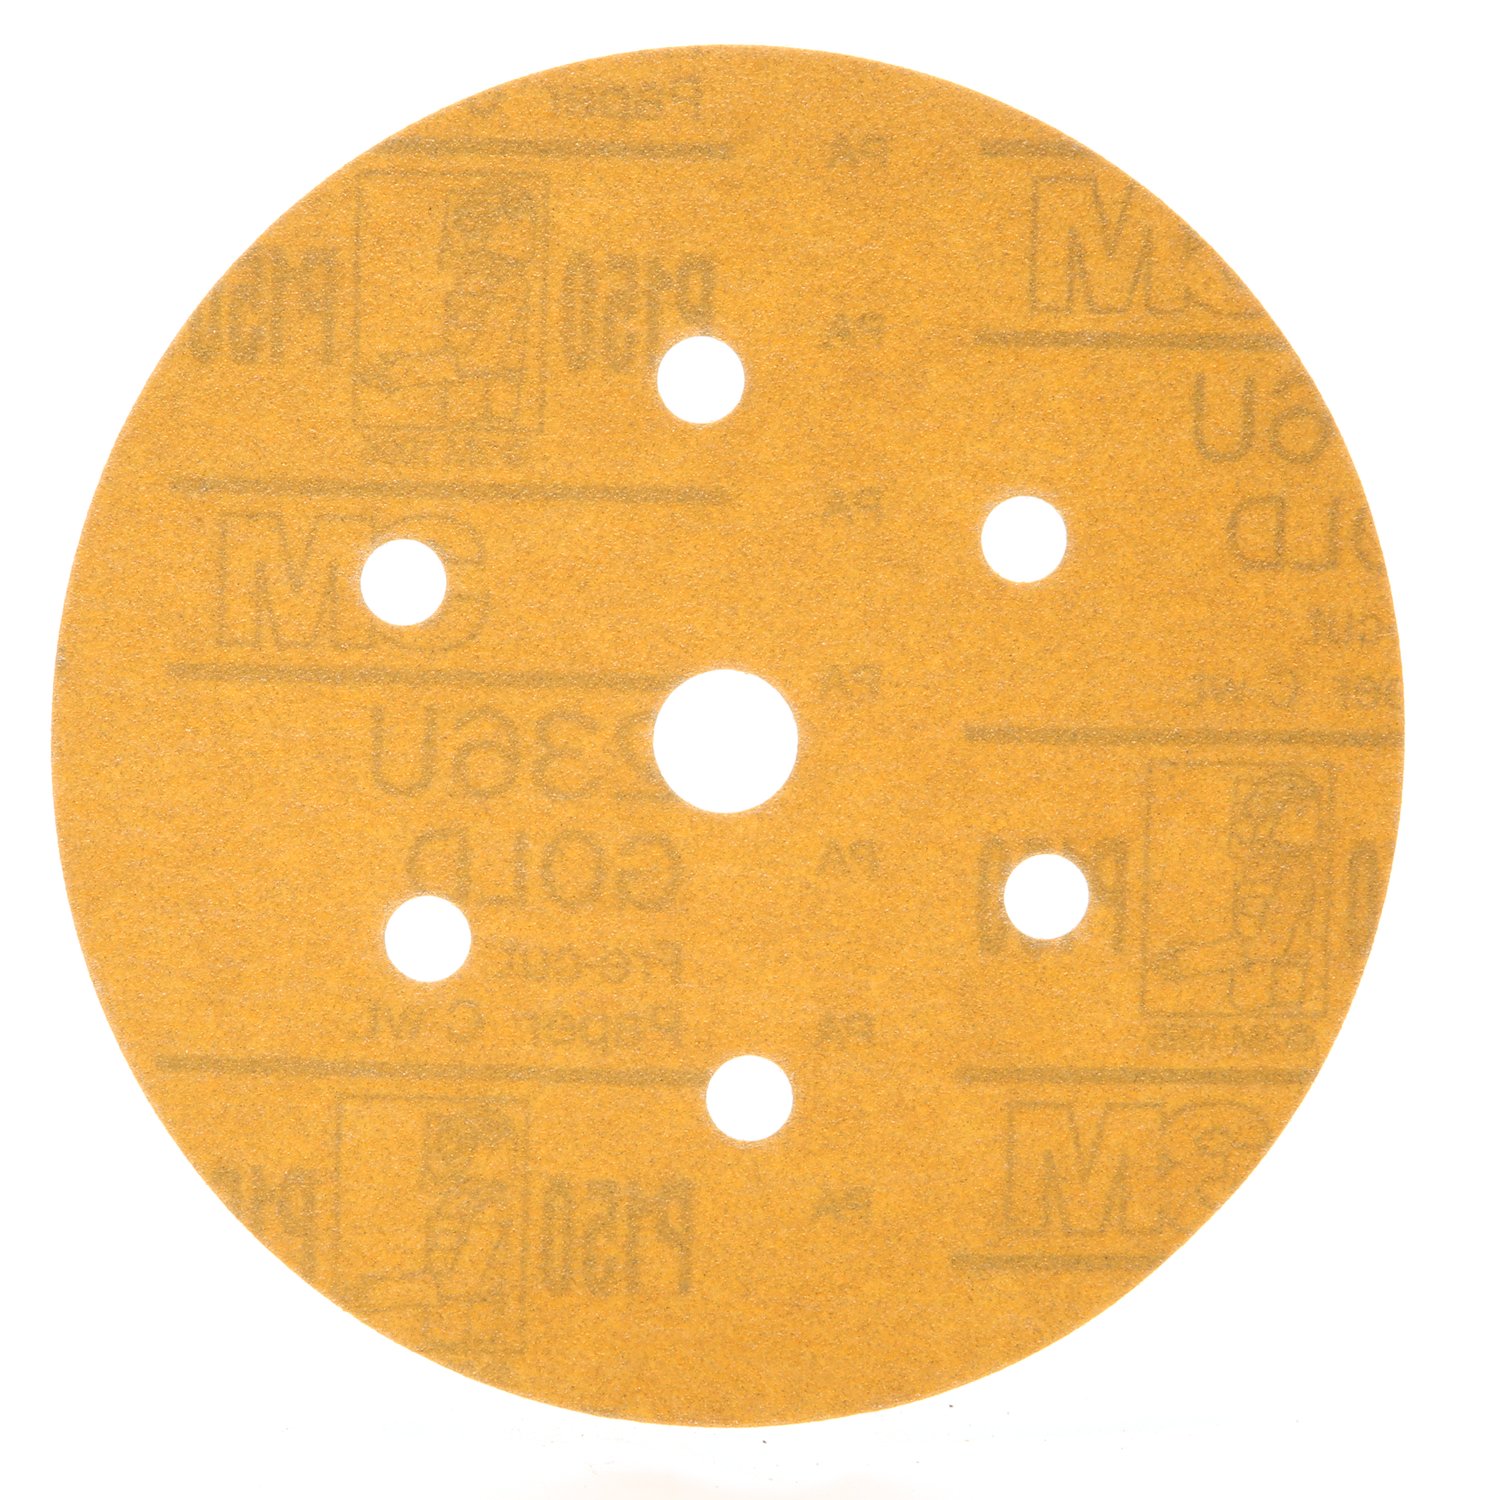 7100030961 - 3M Hookit Gold Disc Dust Free 236U, 01083, 6 in, P80, 75 discs per
carton, 4 cartons per case